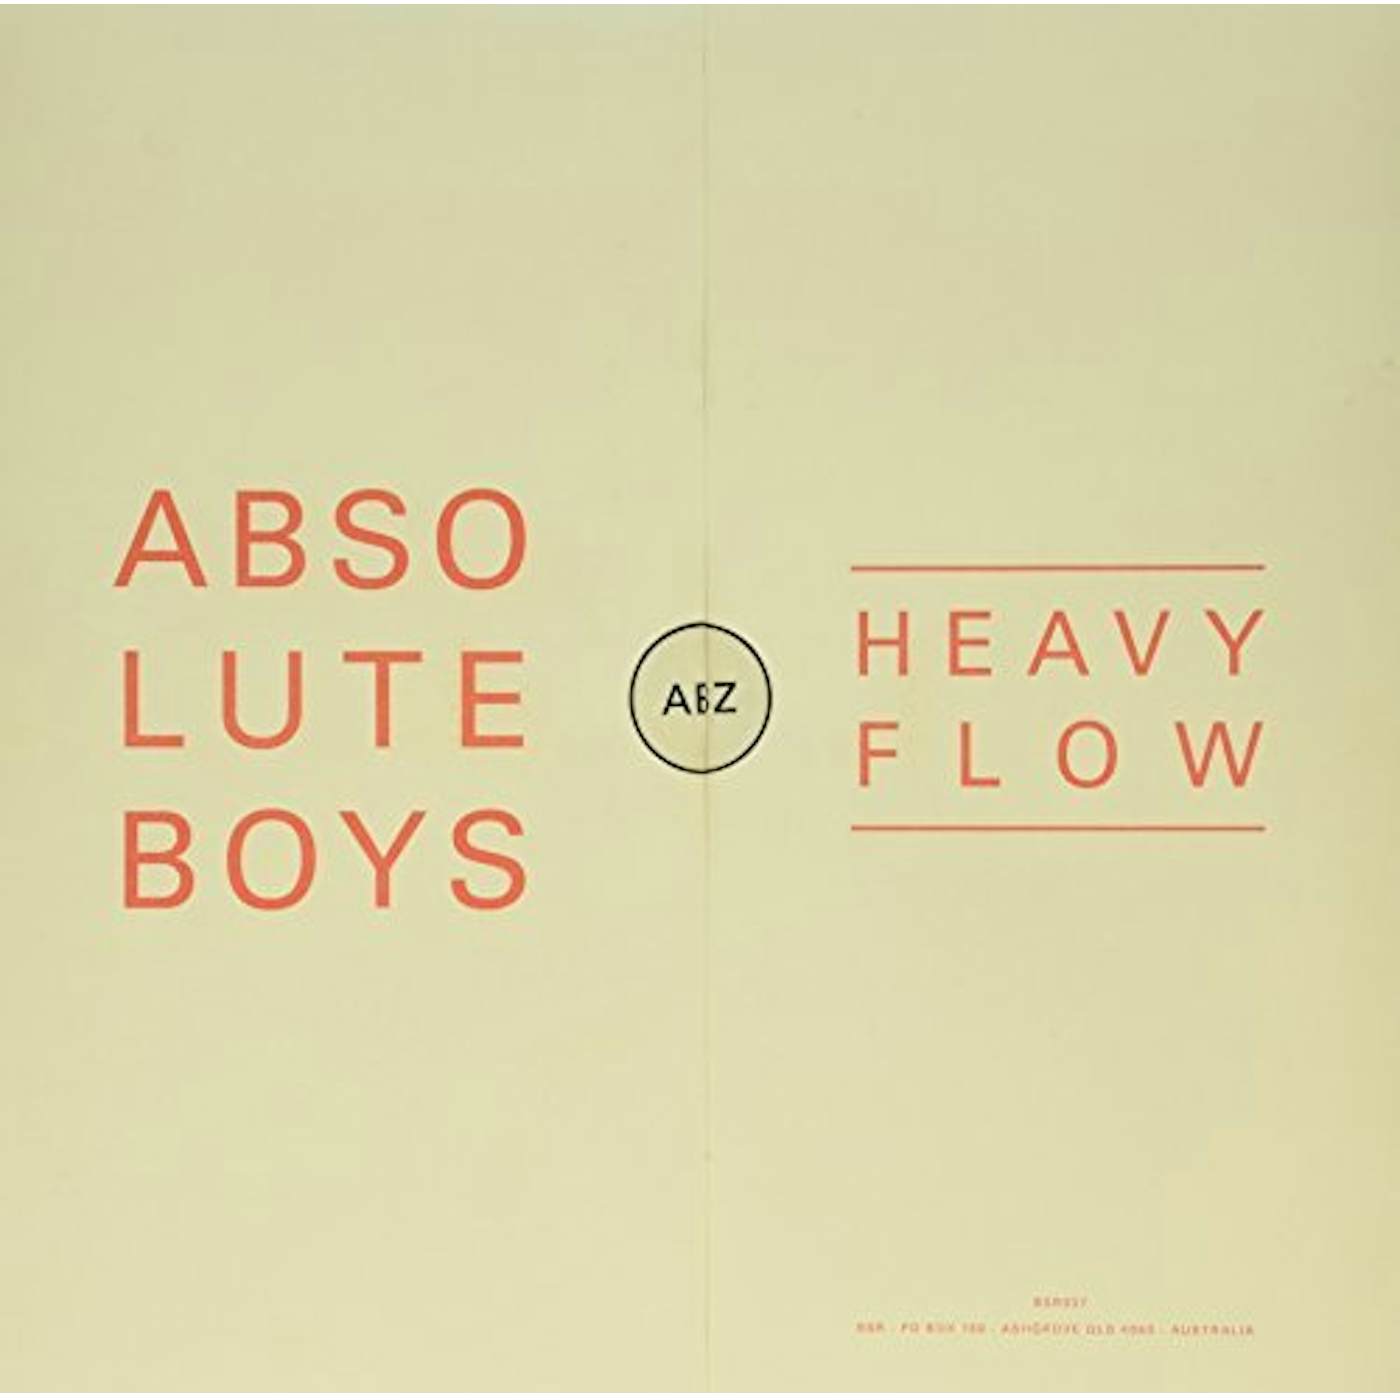 Absolute Boys Heavy Flow Vinyl Record